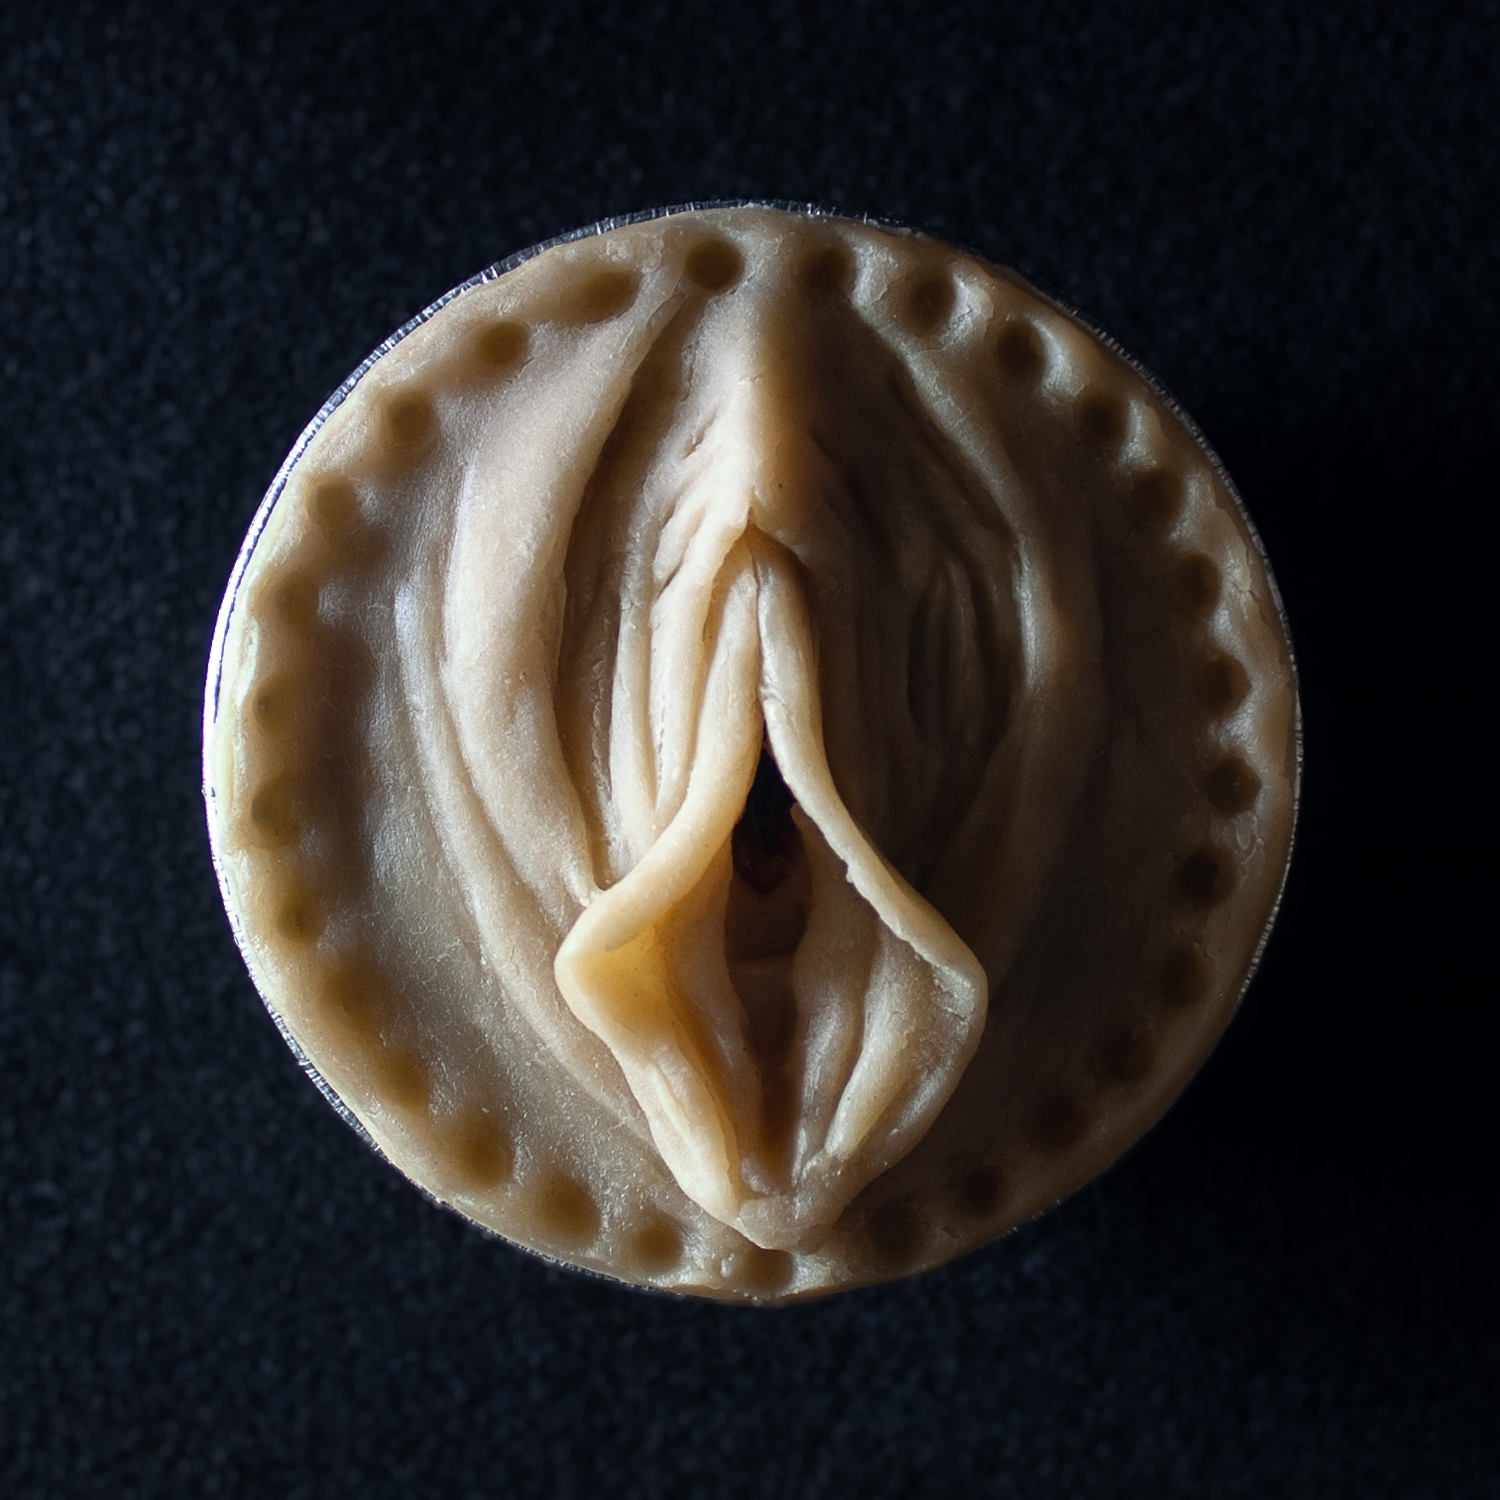 Pie 1, a pie sculpted to appear as a vulva